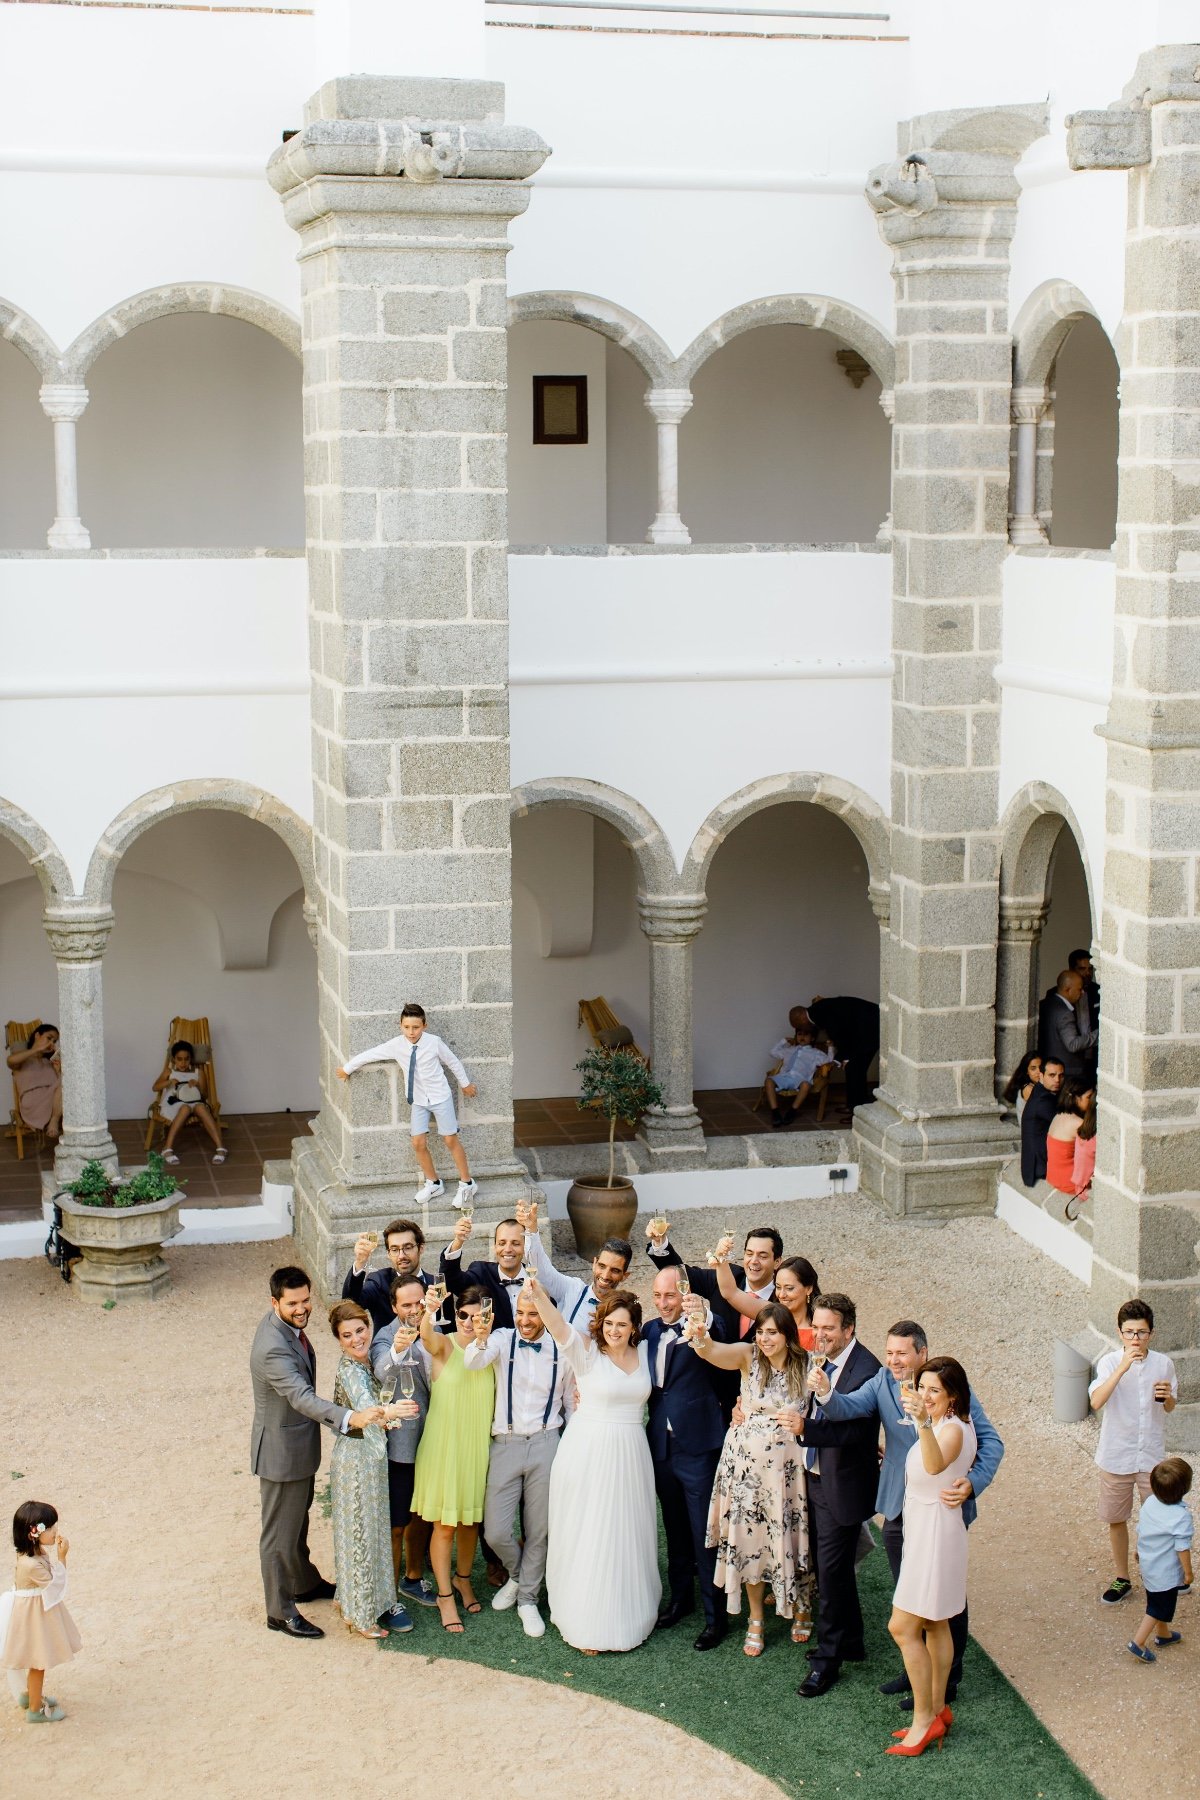 Convento do Espinheiro wedding venue